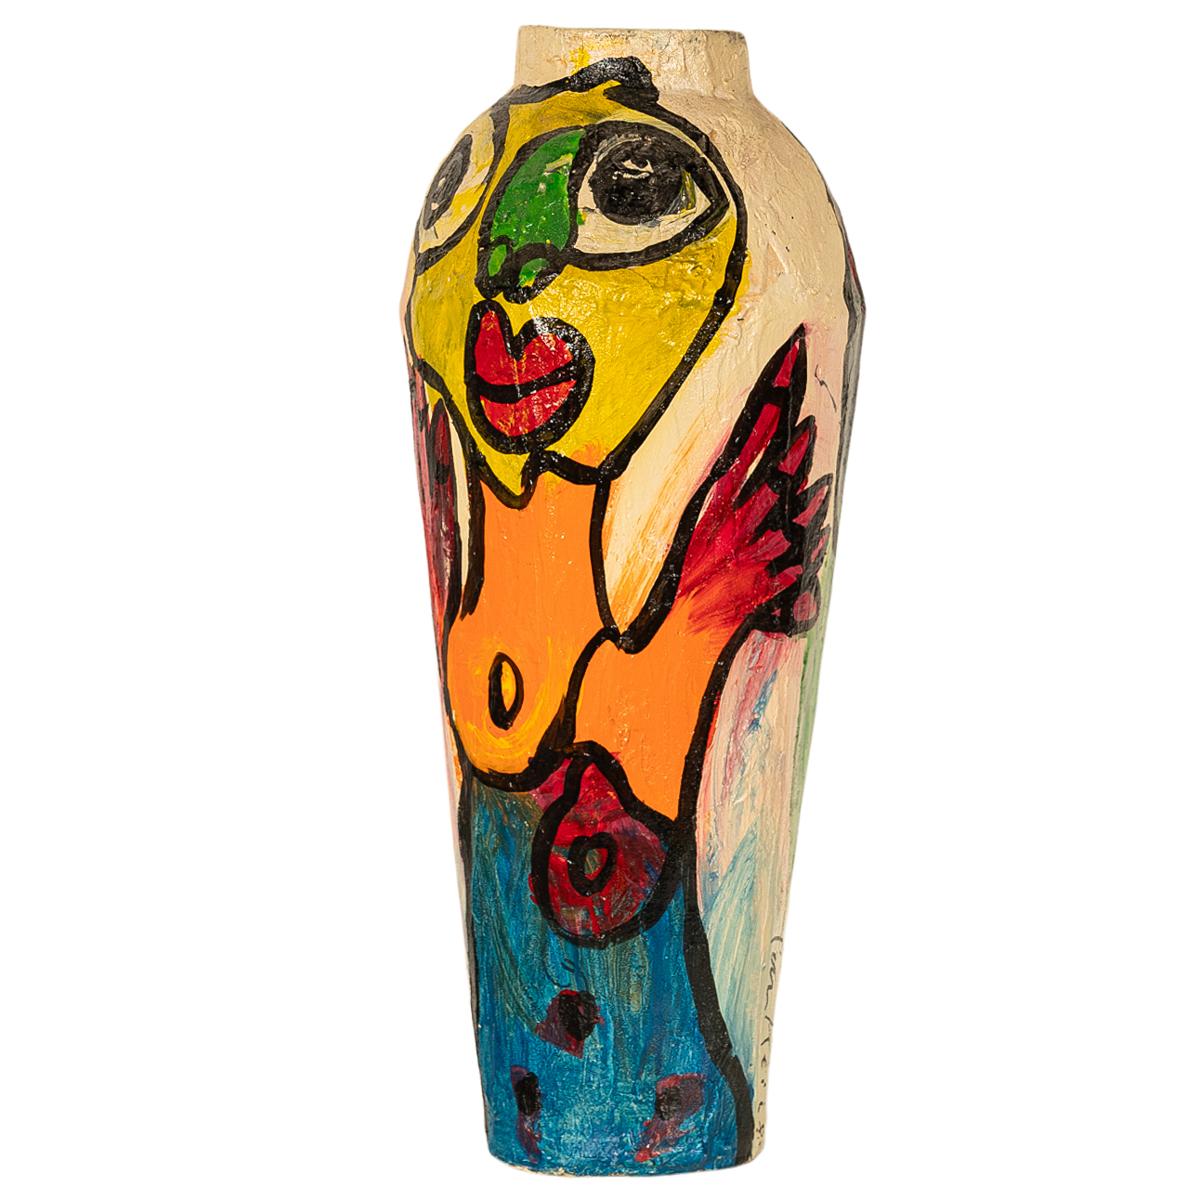 Large Abstract Expressionist Papier-mâché Painted Floor Sculpture Vase 1985 For Sale 5